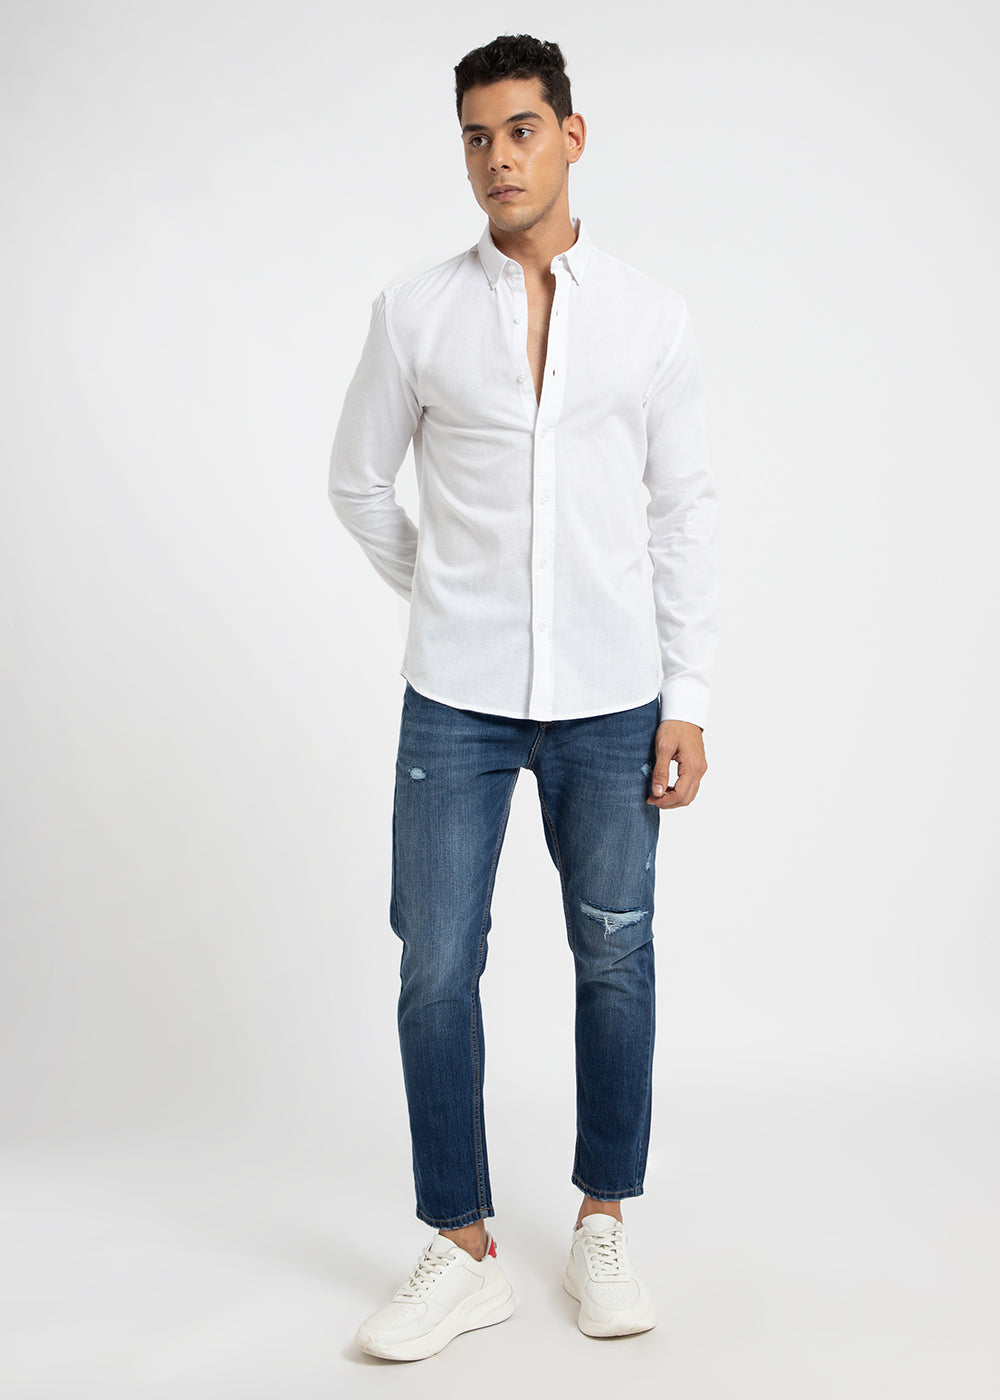 Pearl White Cotton Linen Shirt